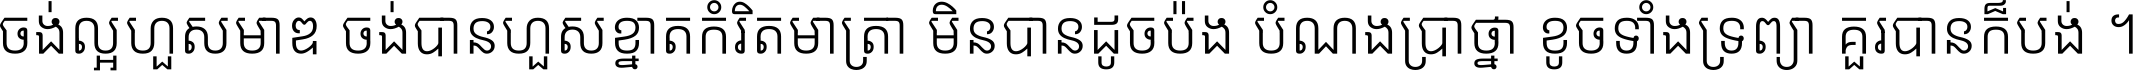 Noto Sans Khmer UI Condensed Light